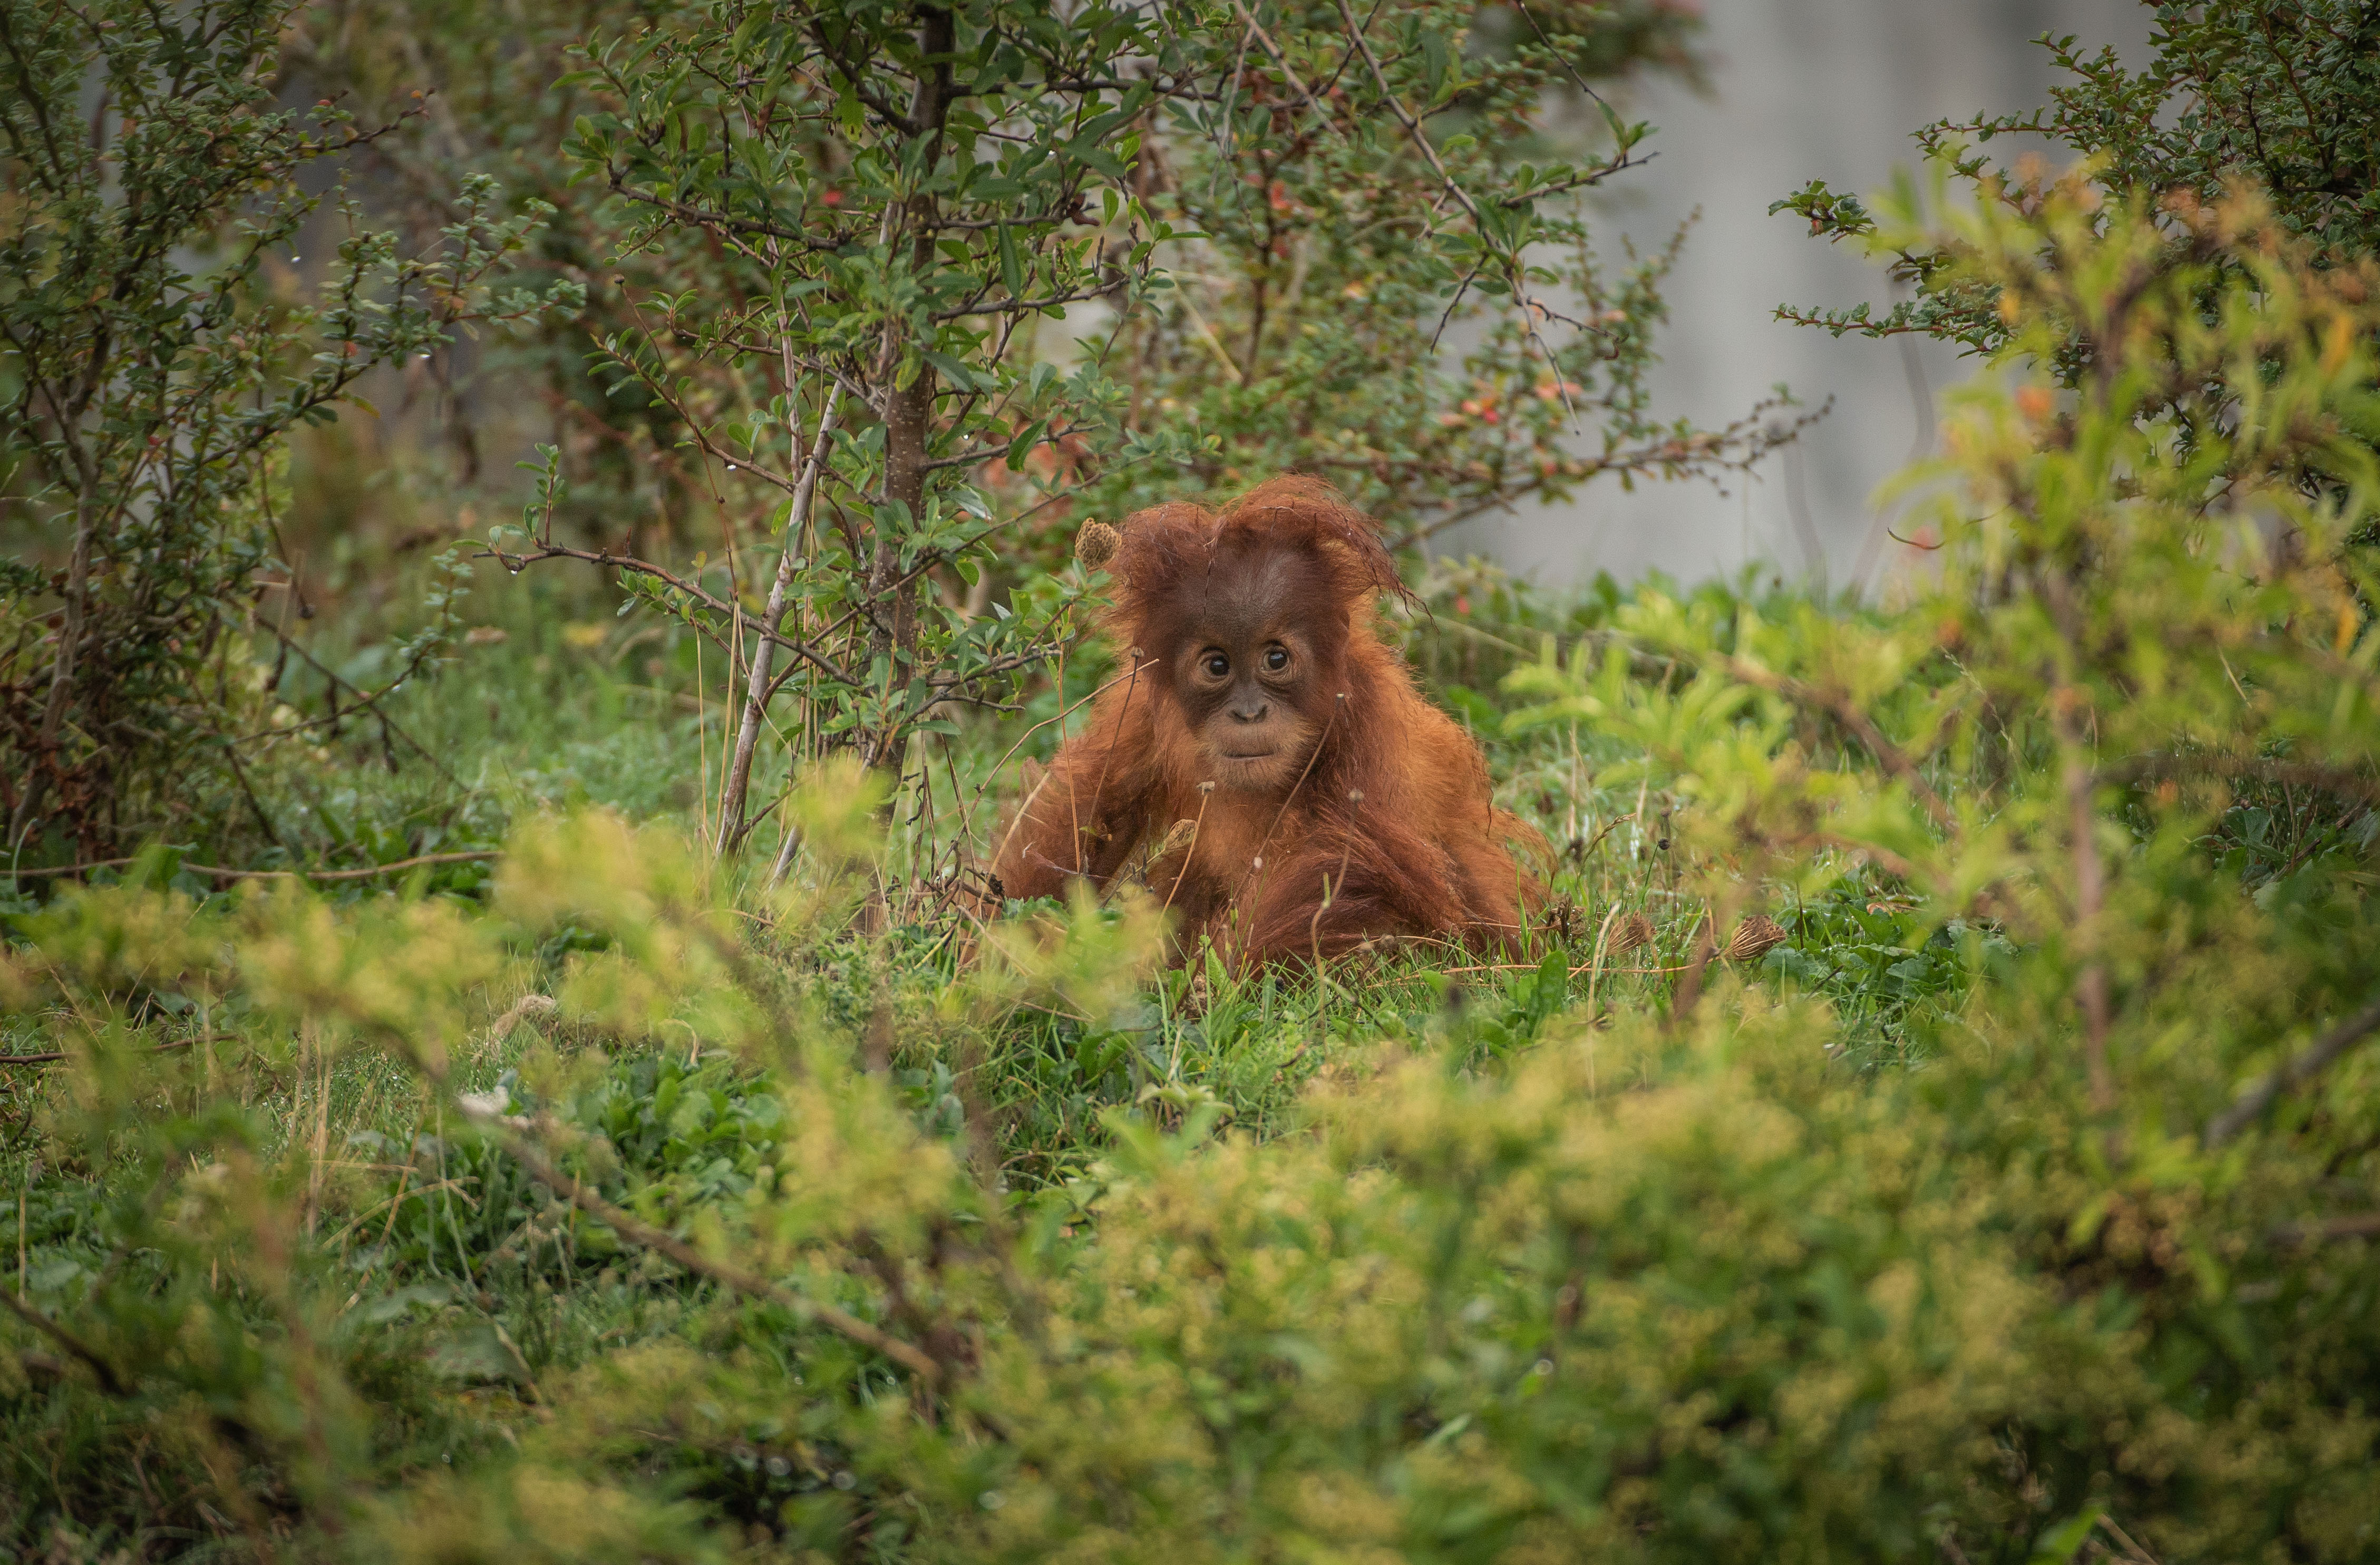 Baby orangutan at Chester Zoo